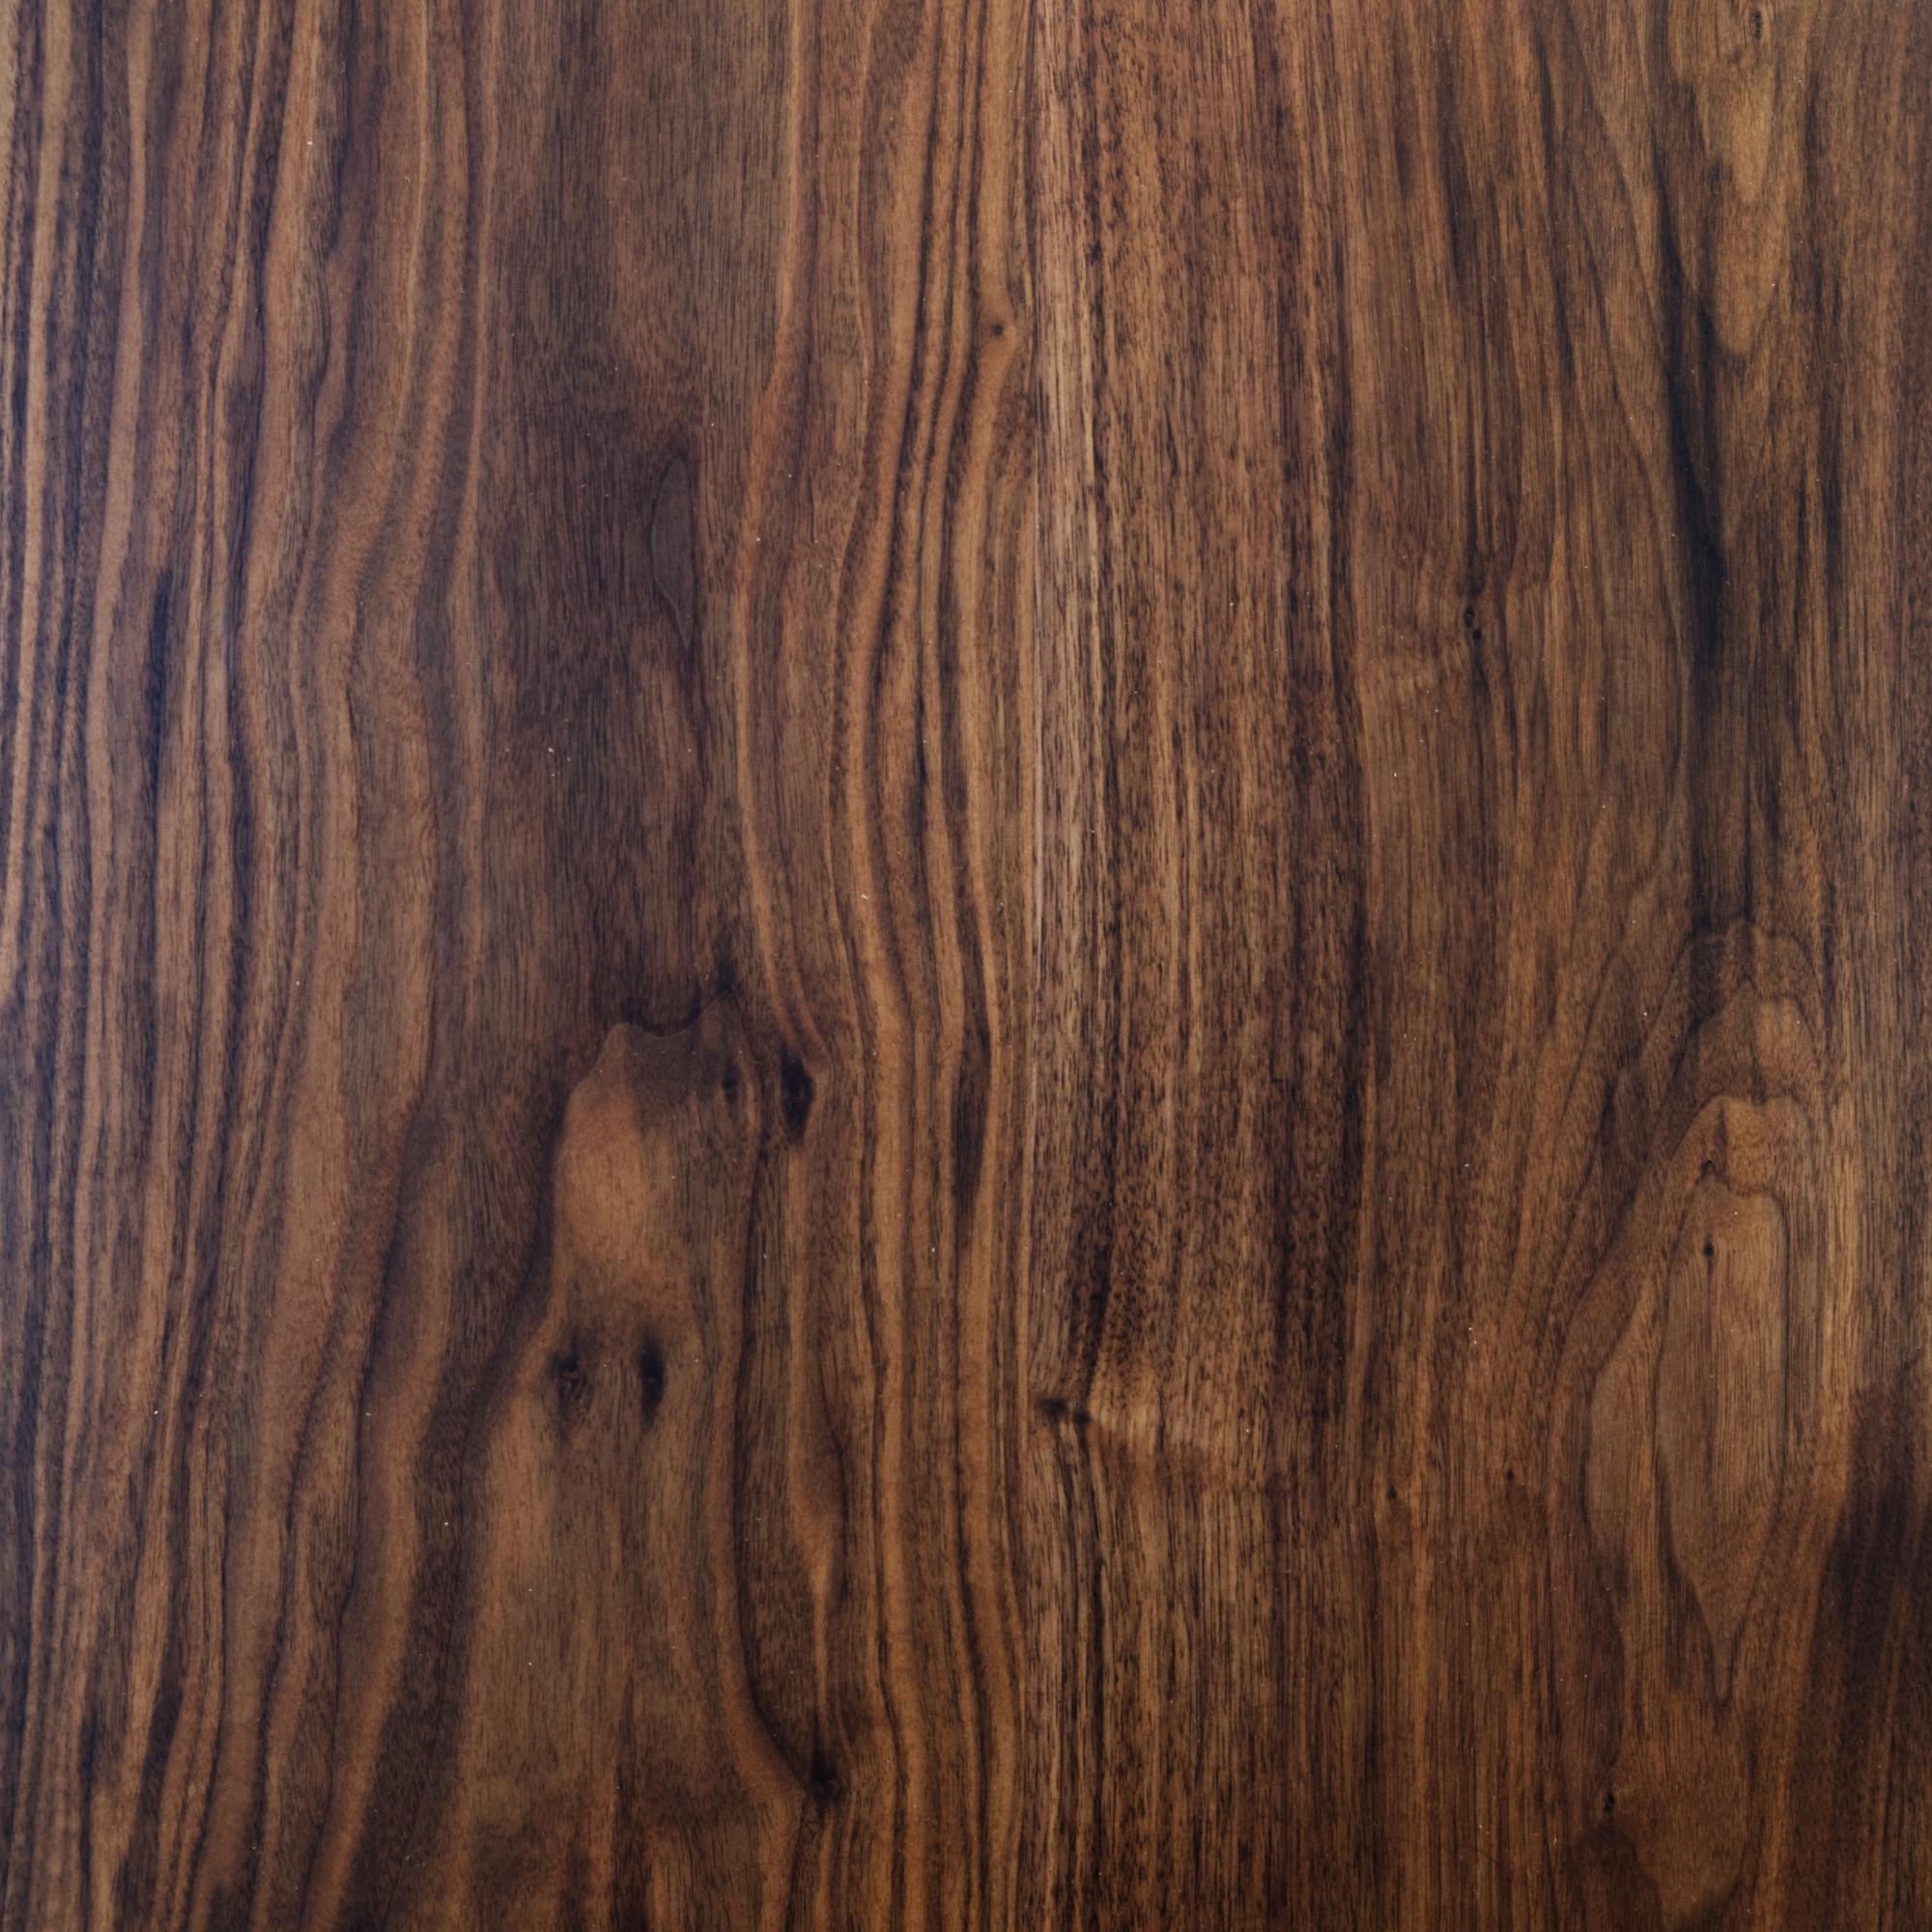 Oak Modern Handmade Hardwood Walnut Desk Dinning Table For Sale